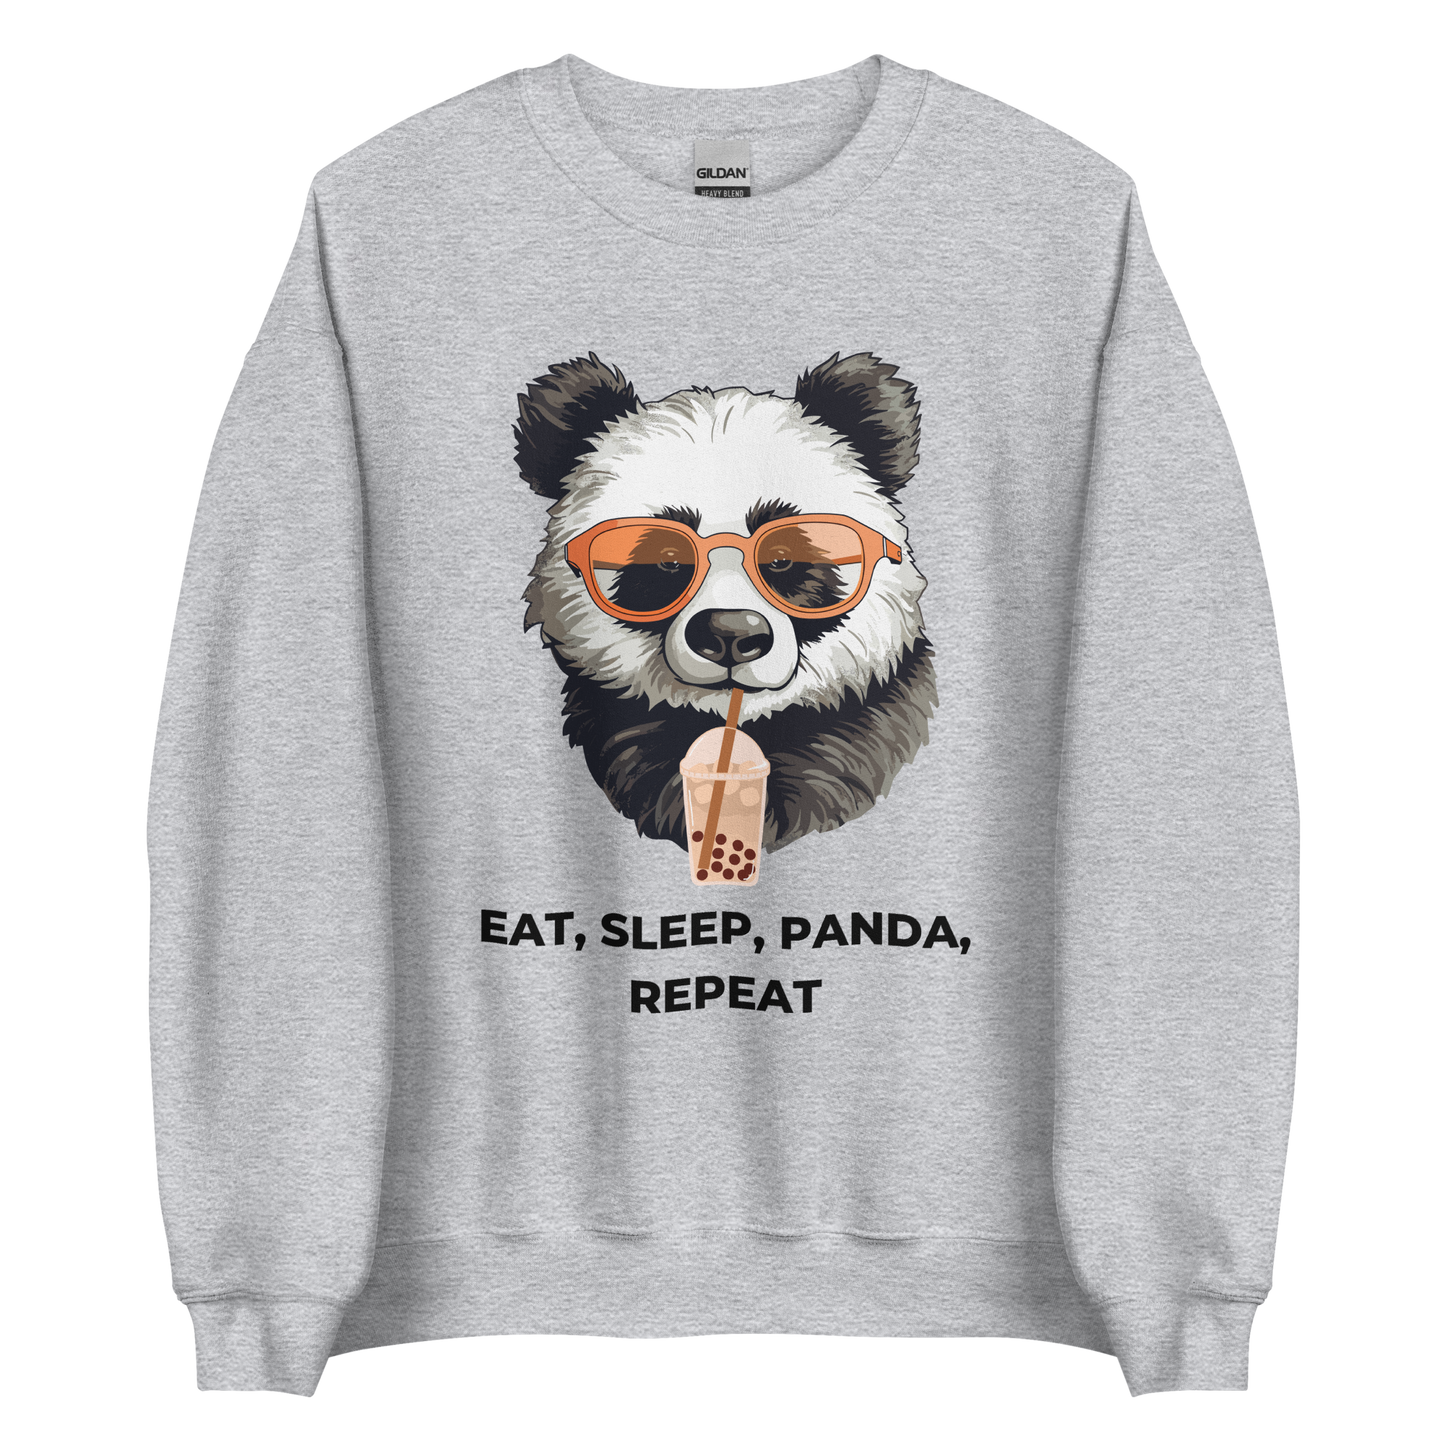 Sport Grey Panda Sweatshirt featuring an adorable Eat, Sleep, Panda, Repeat graphic on the chest - Funny Graphic Panda Sweatshirts - Boozy Fox